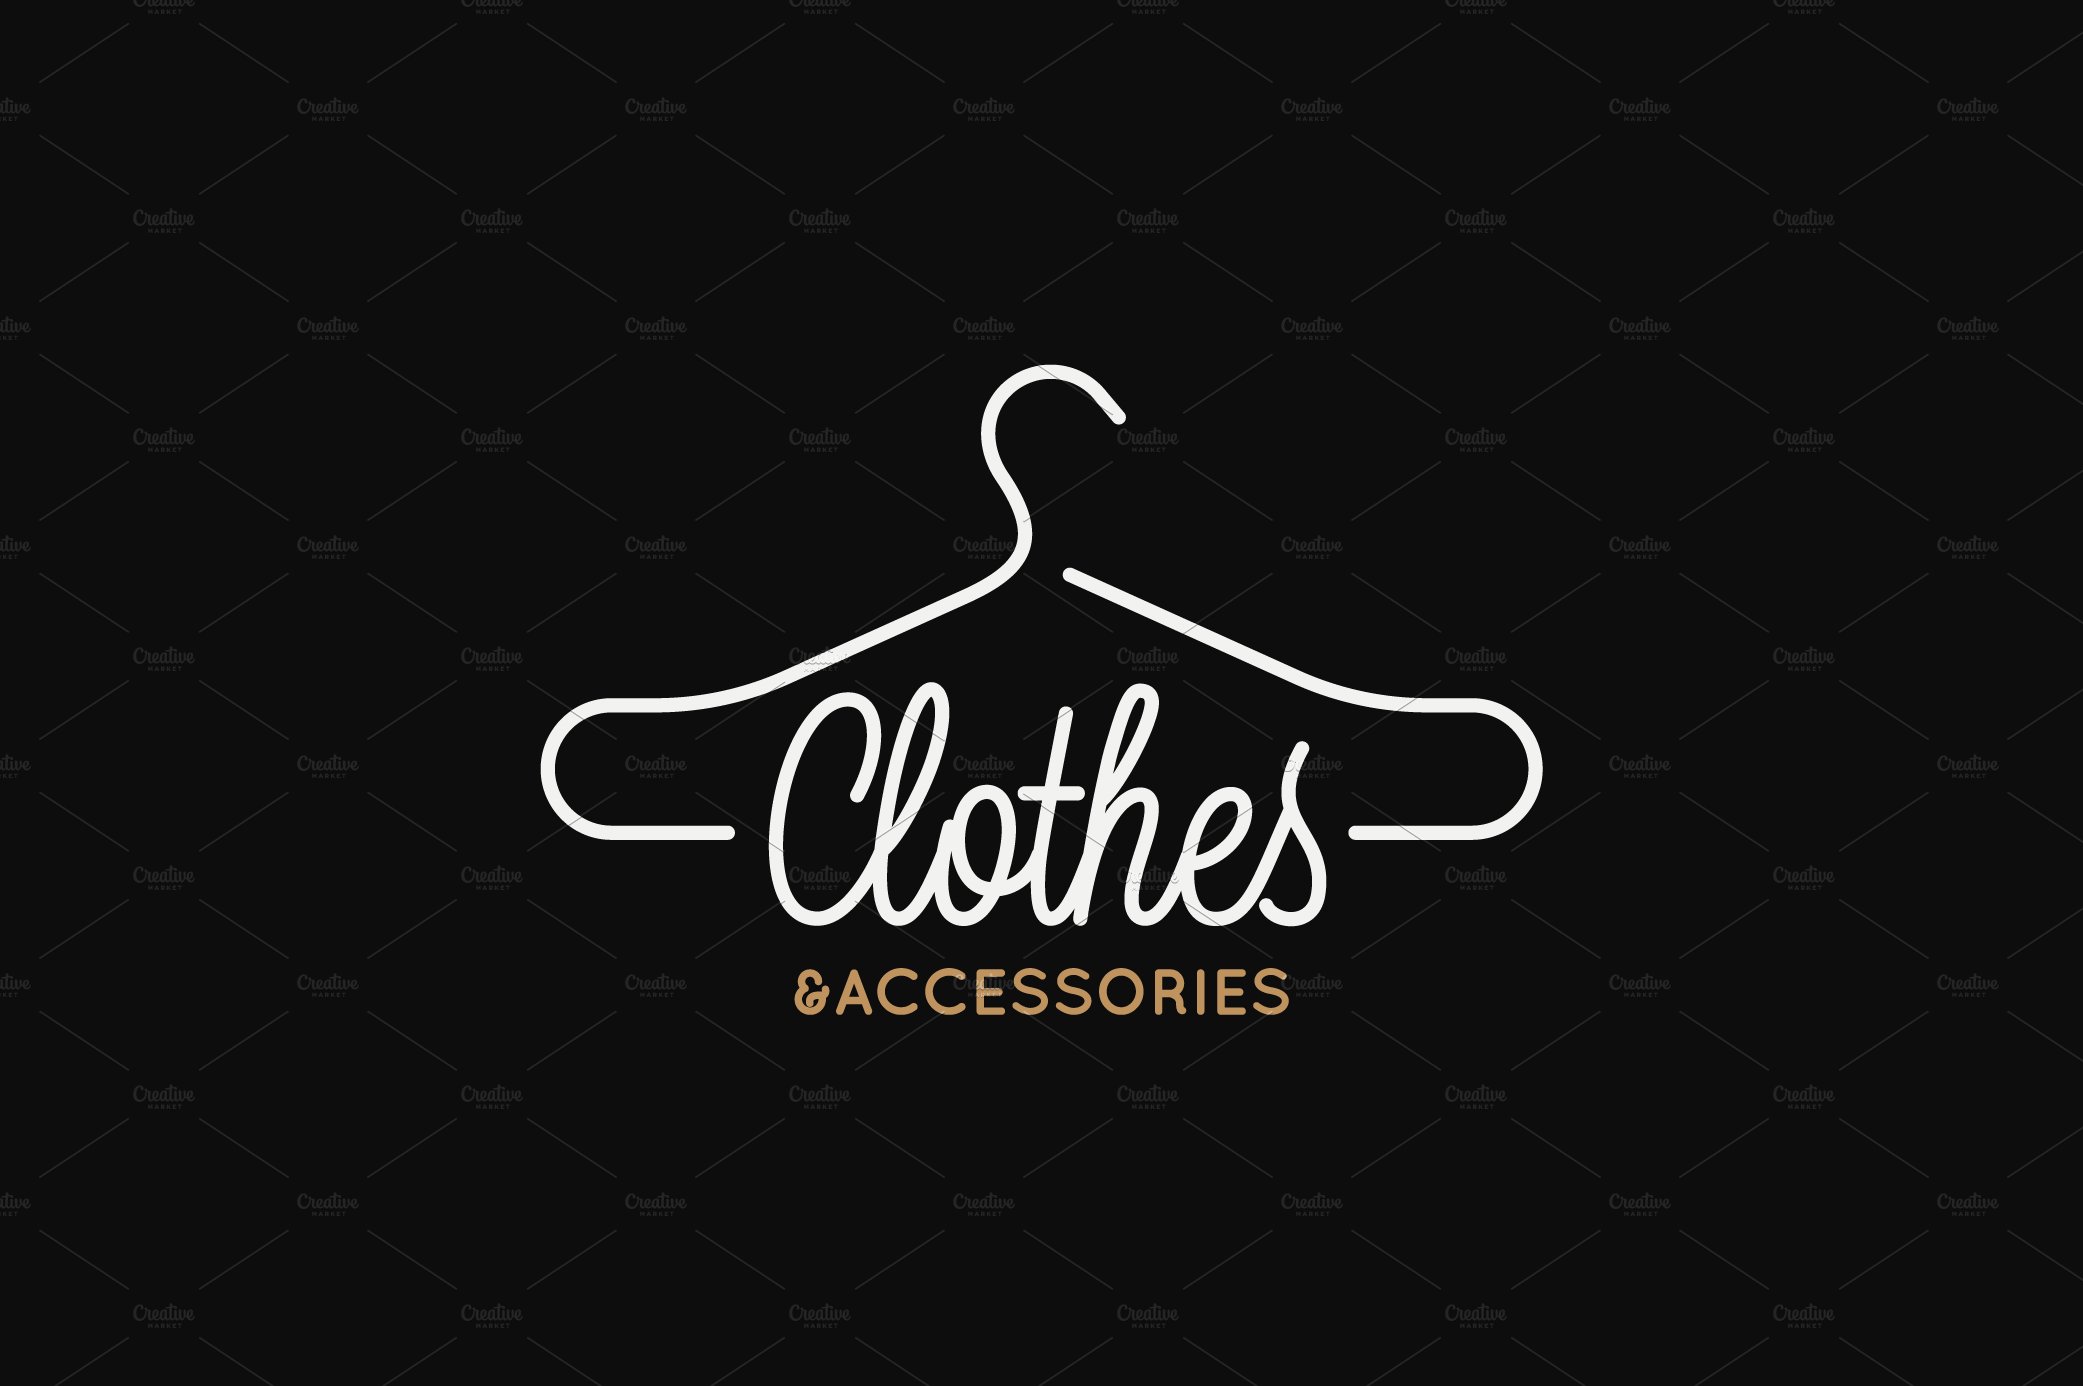 Clothes and accessories logo. – MasterBundles